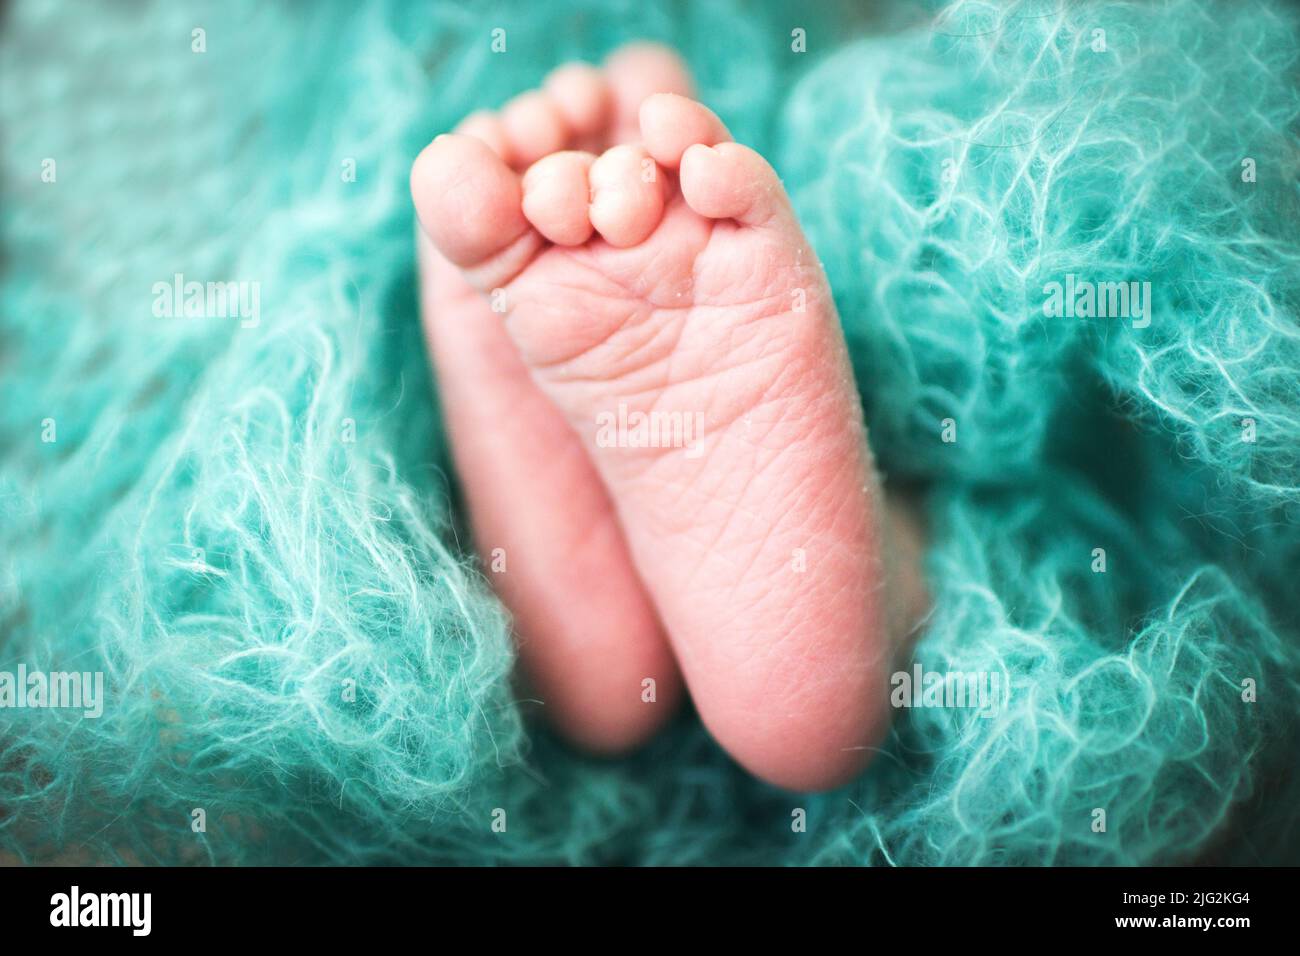 newborn baby feet. kids legs wrapped in a blue blanket Stock Photo